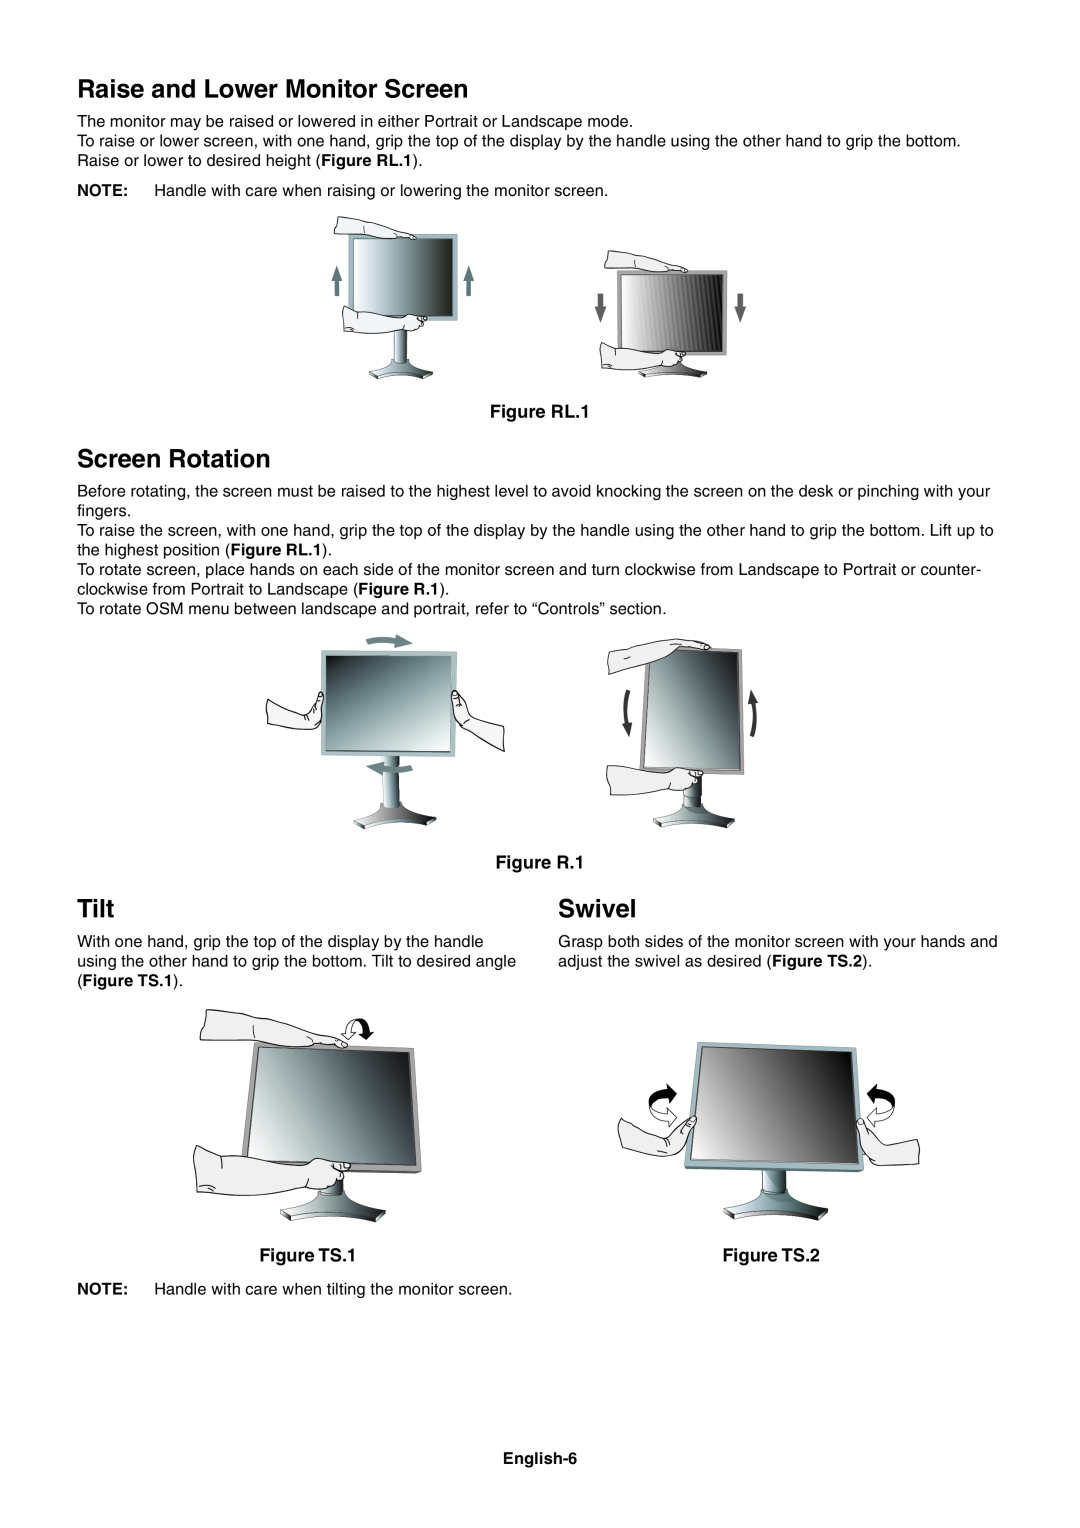 NEC LCD1990FXp Raise and Lower Monitor Screen, Screen Rotation, Tilt, Swivel, Figure RL.1, Figure R.1, Figure TS.1 